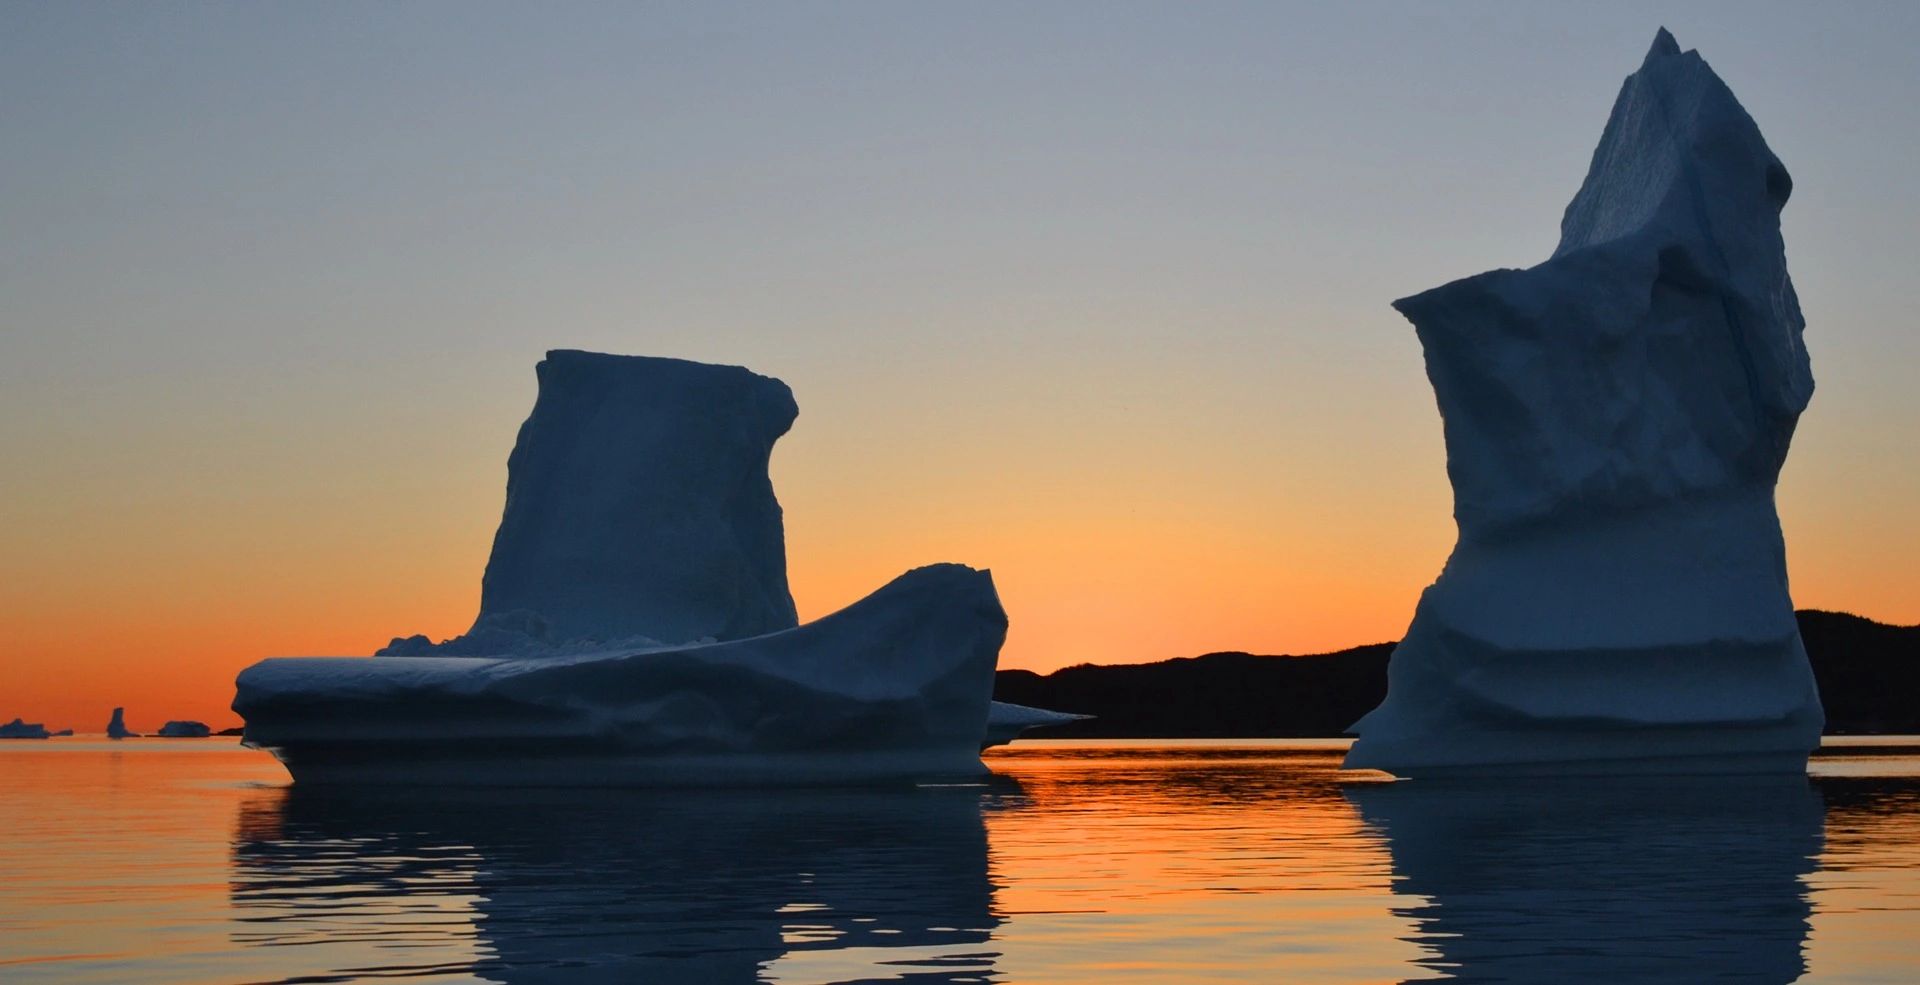 A beautiful sunset iceberg tour!
